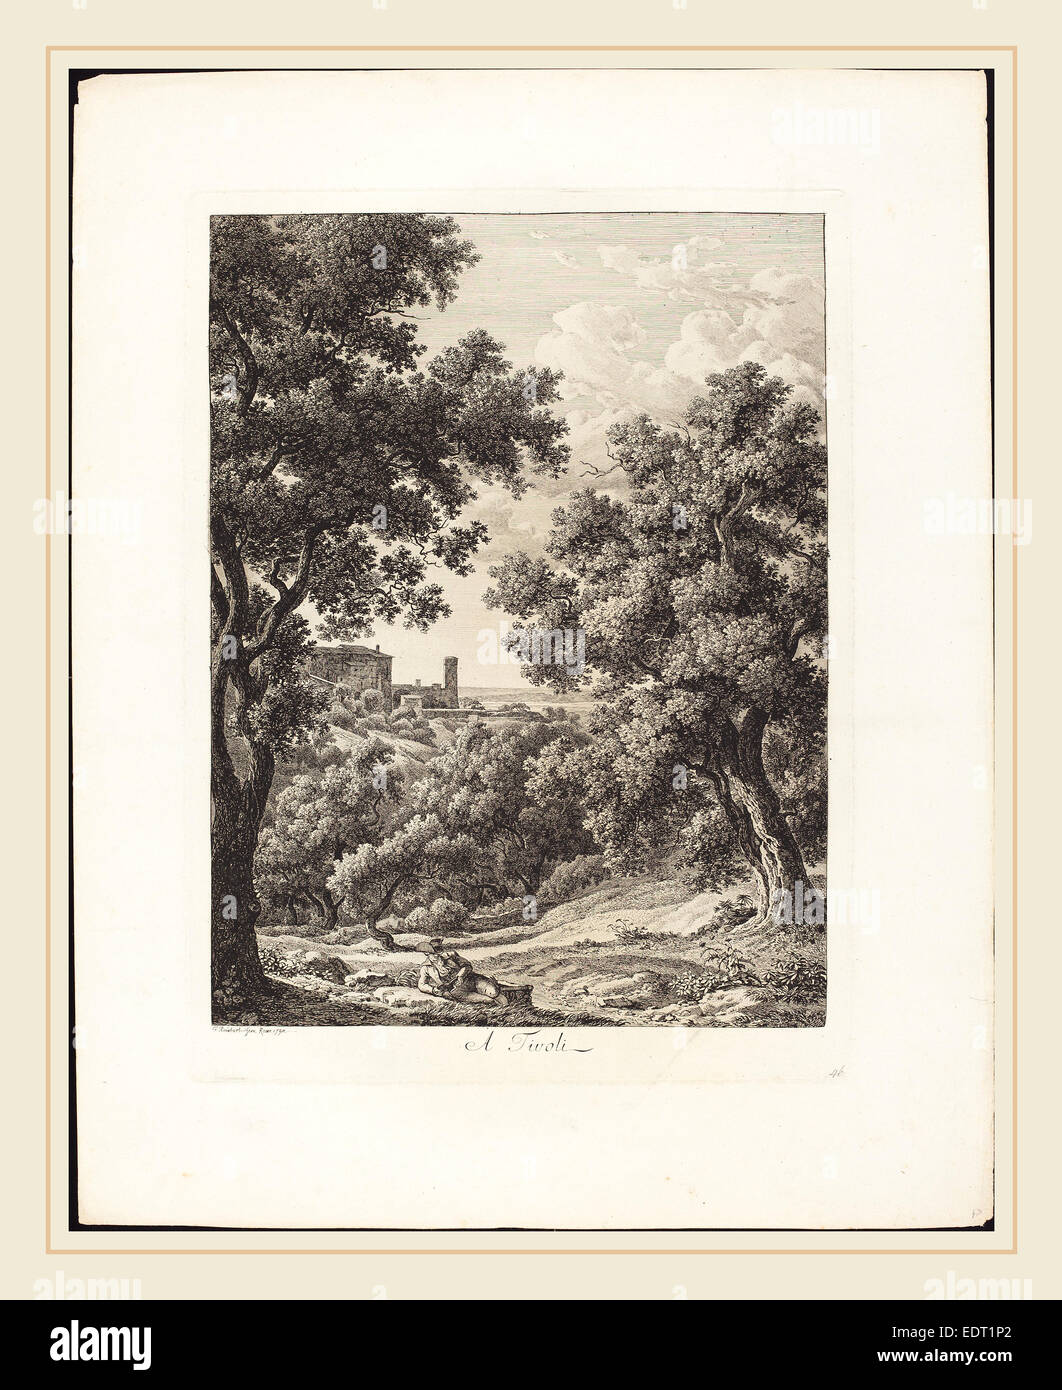 Johann Christian Reinhart (German, 1761-1847), A Tivoli, 1794, etching on laid paper Stock Photo